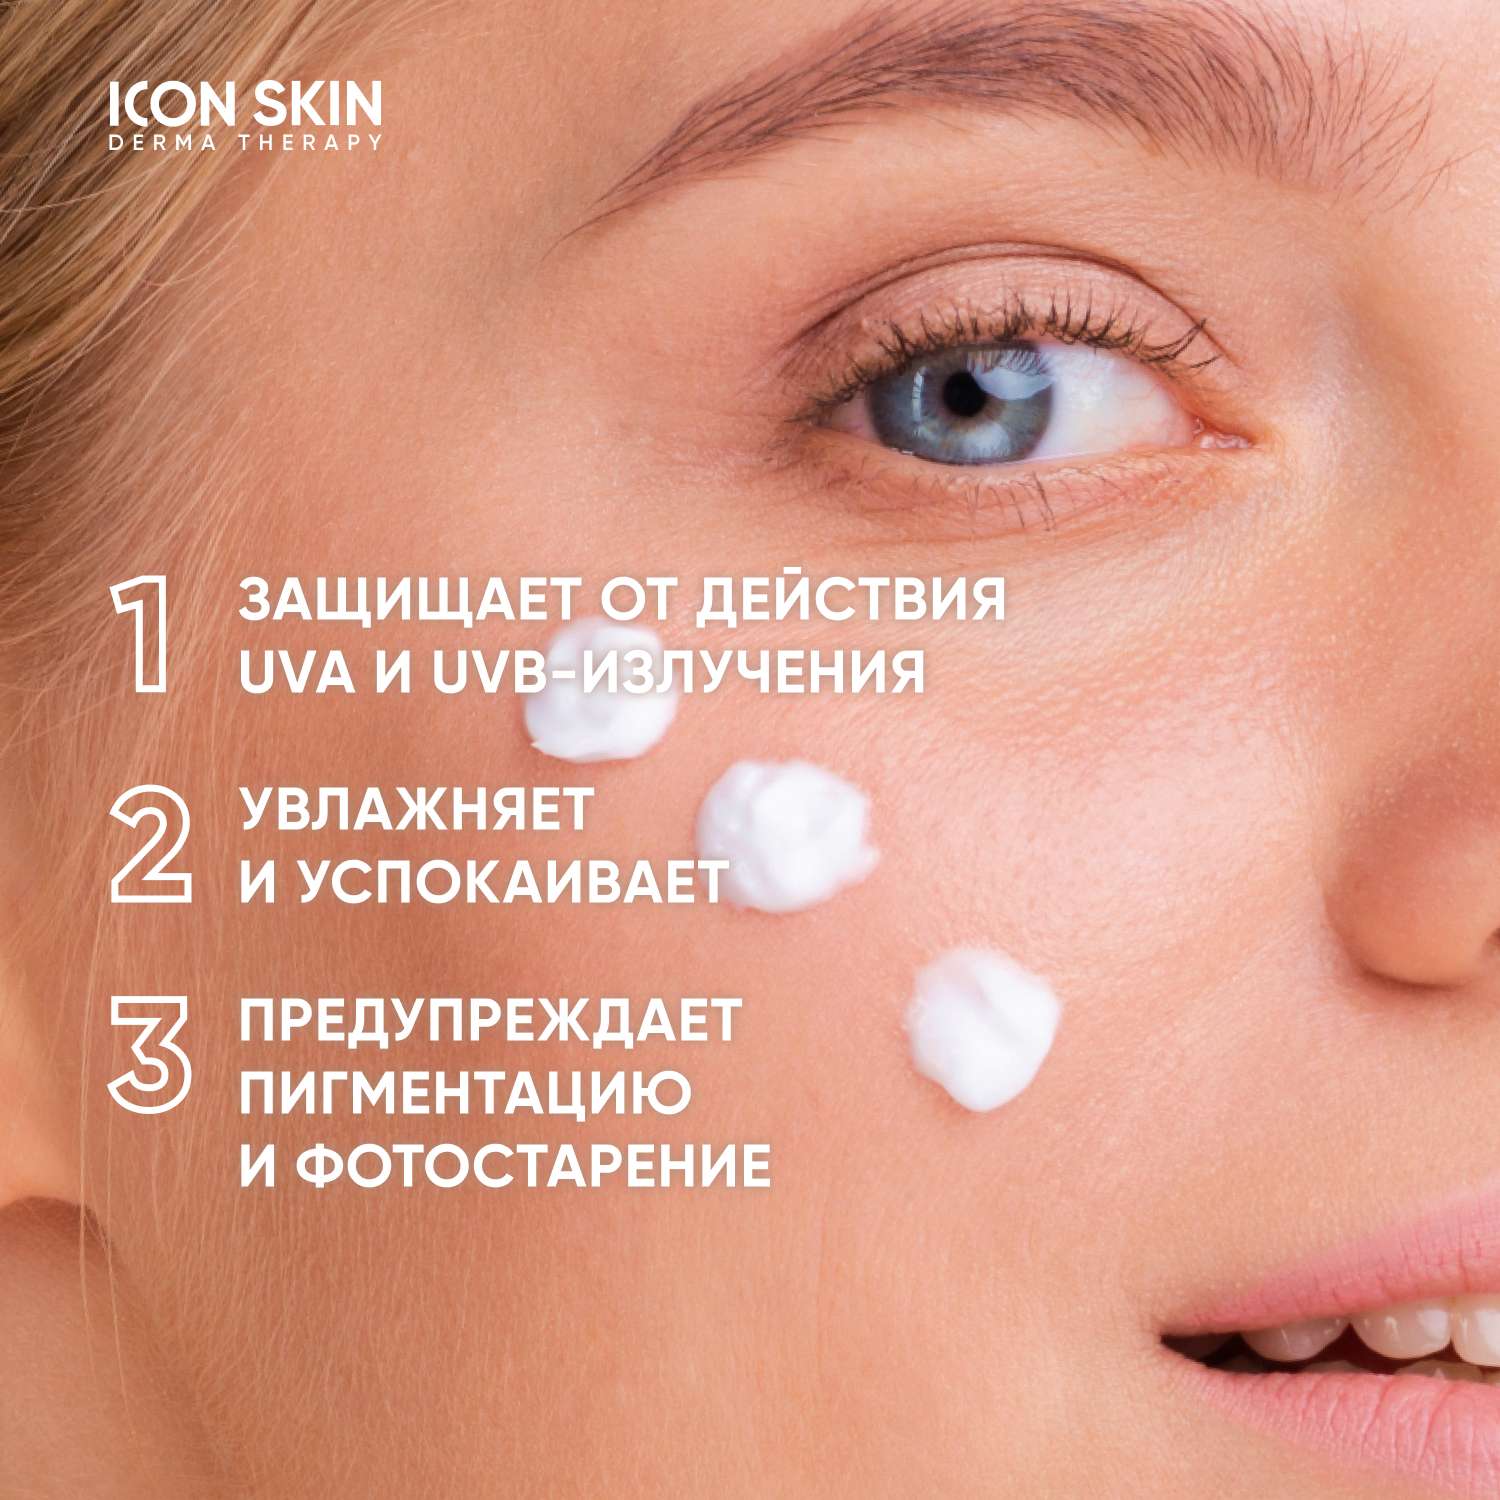 Солнцезащитный крем для лица ICON SKIN SPF 50 увлажняющий для всех типов кожи 75 мл - фото 2